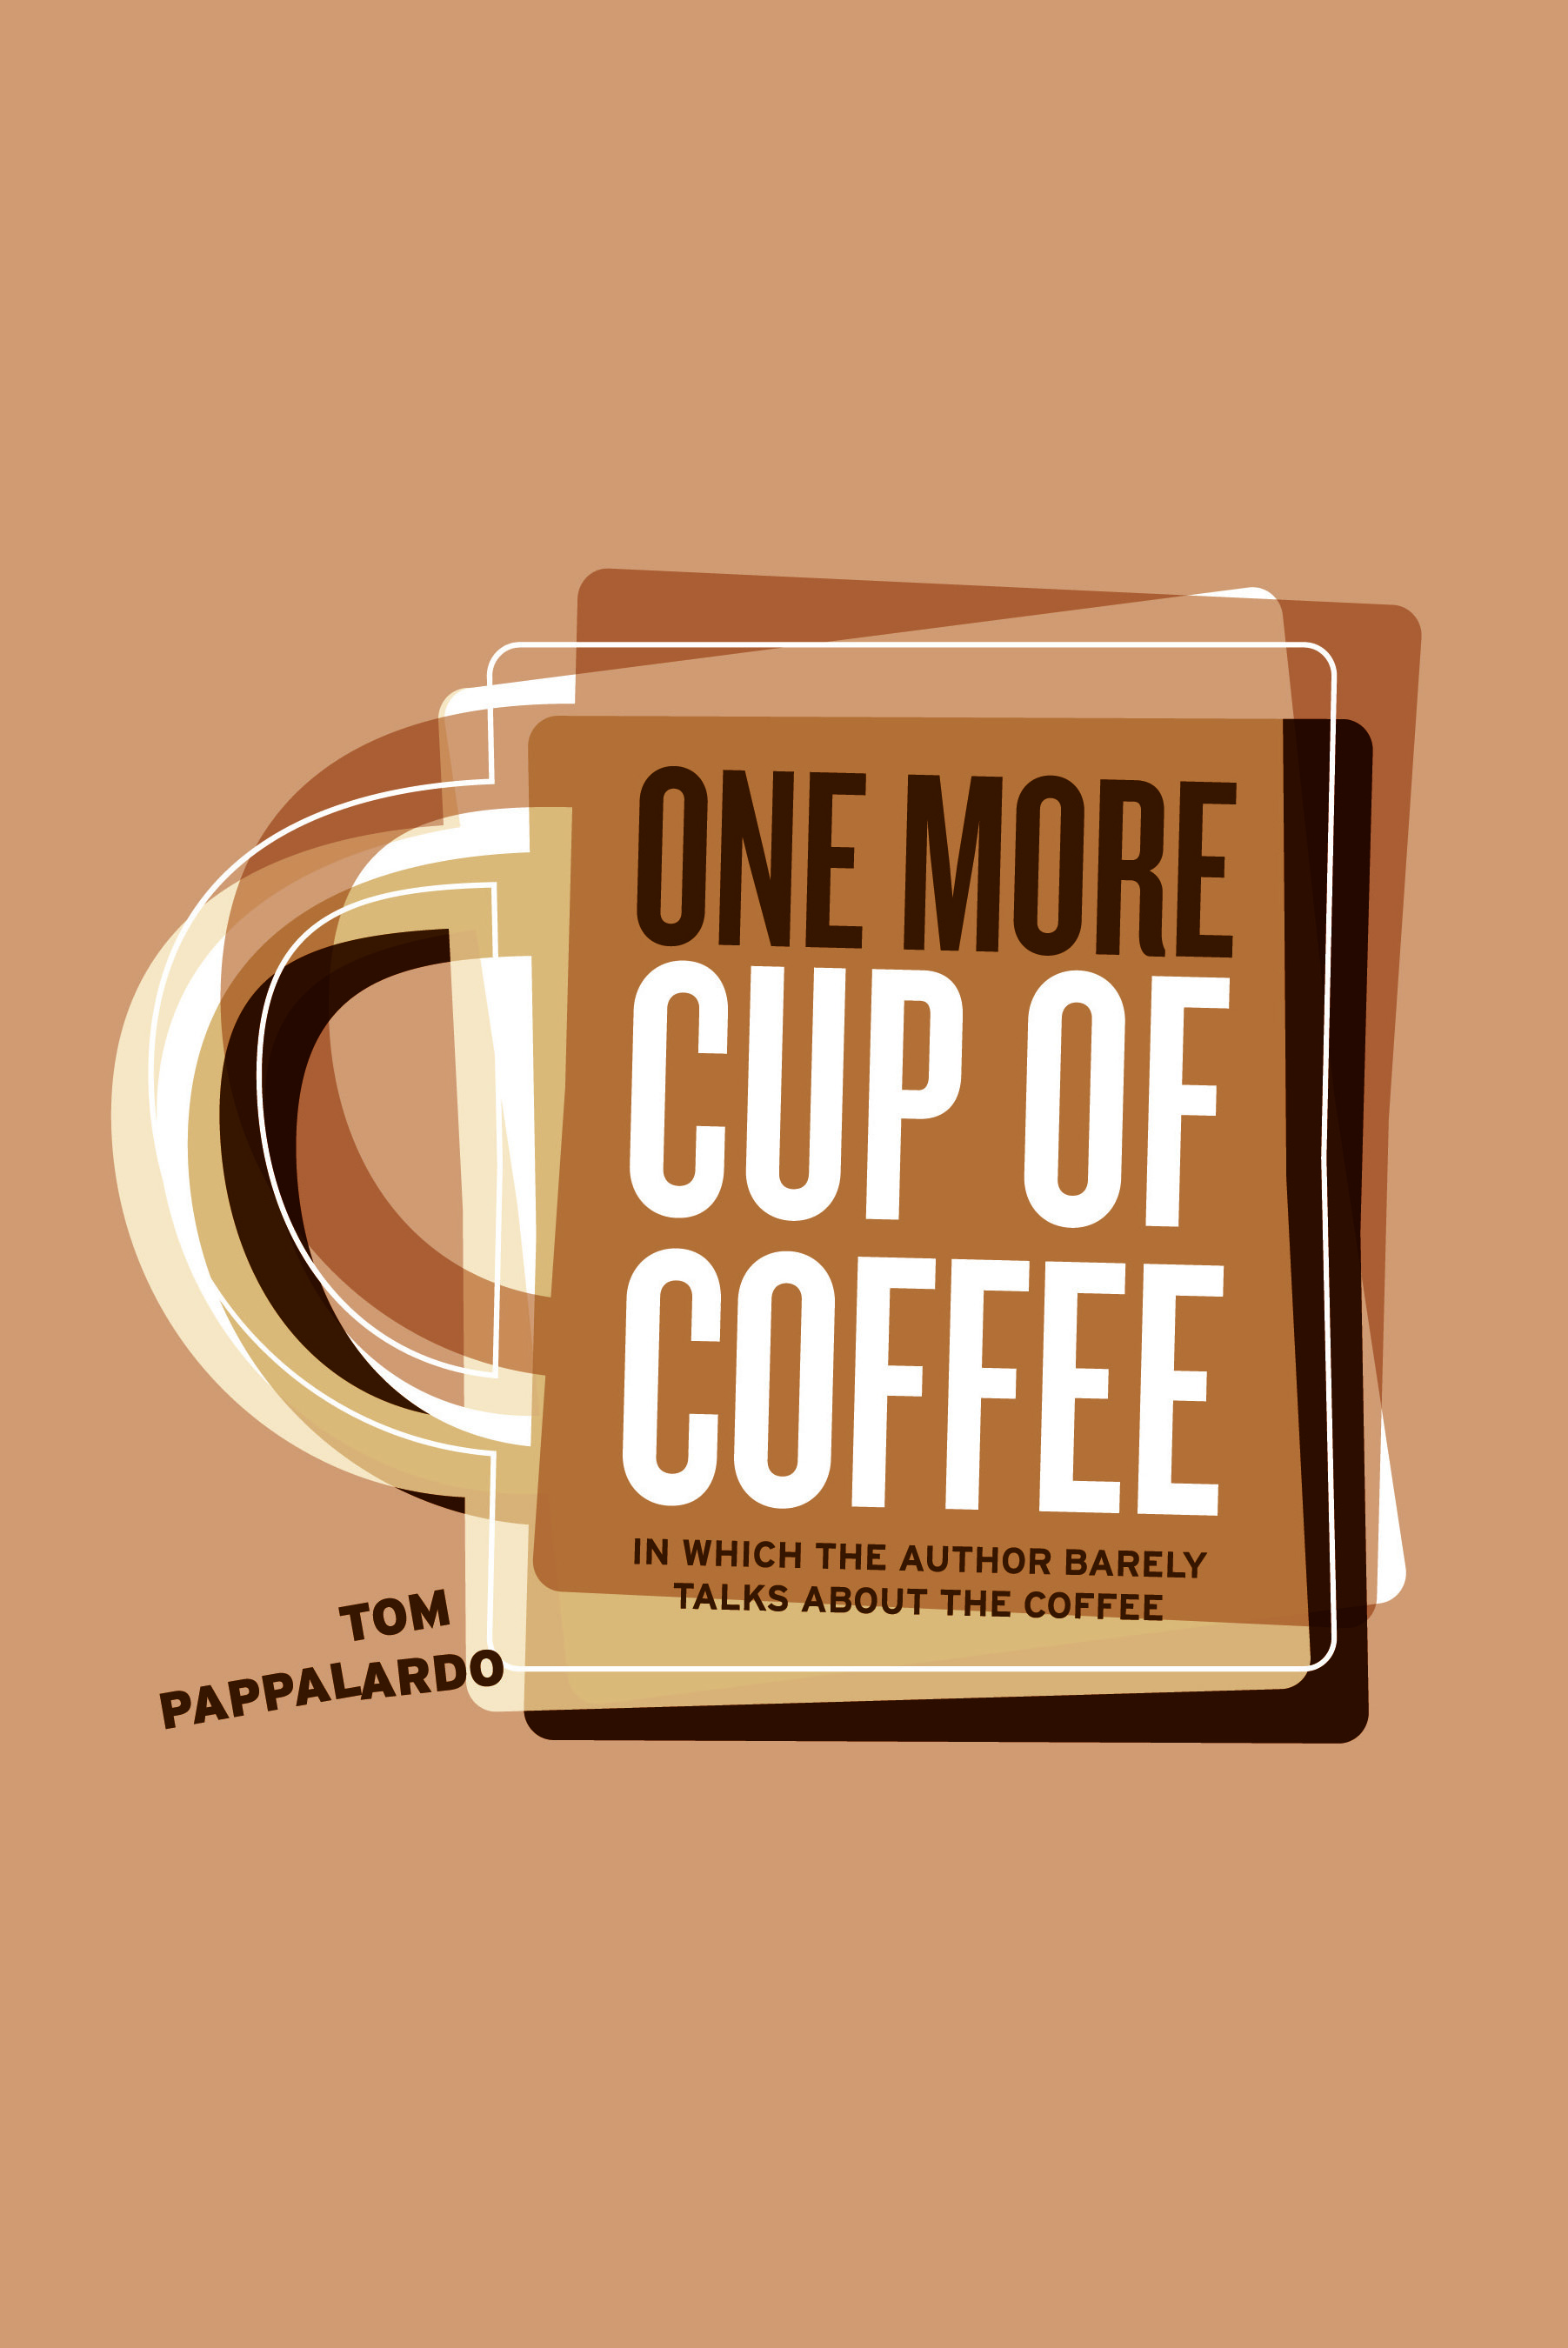 One more coffee. One more кофейня. Coffee talk обложка. More Coffee. Кофе Tom n Toms.